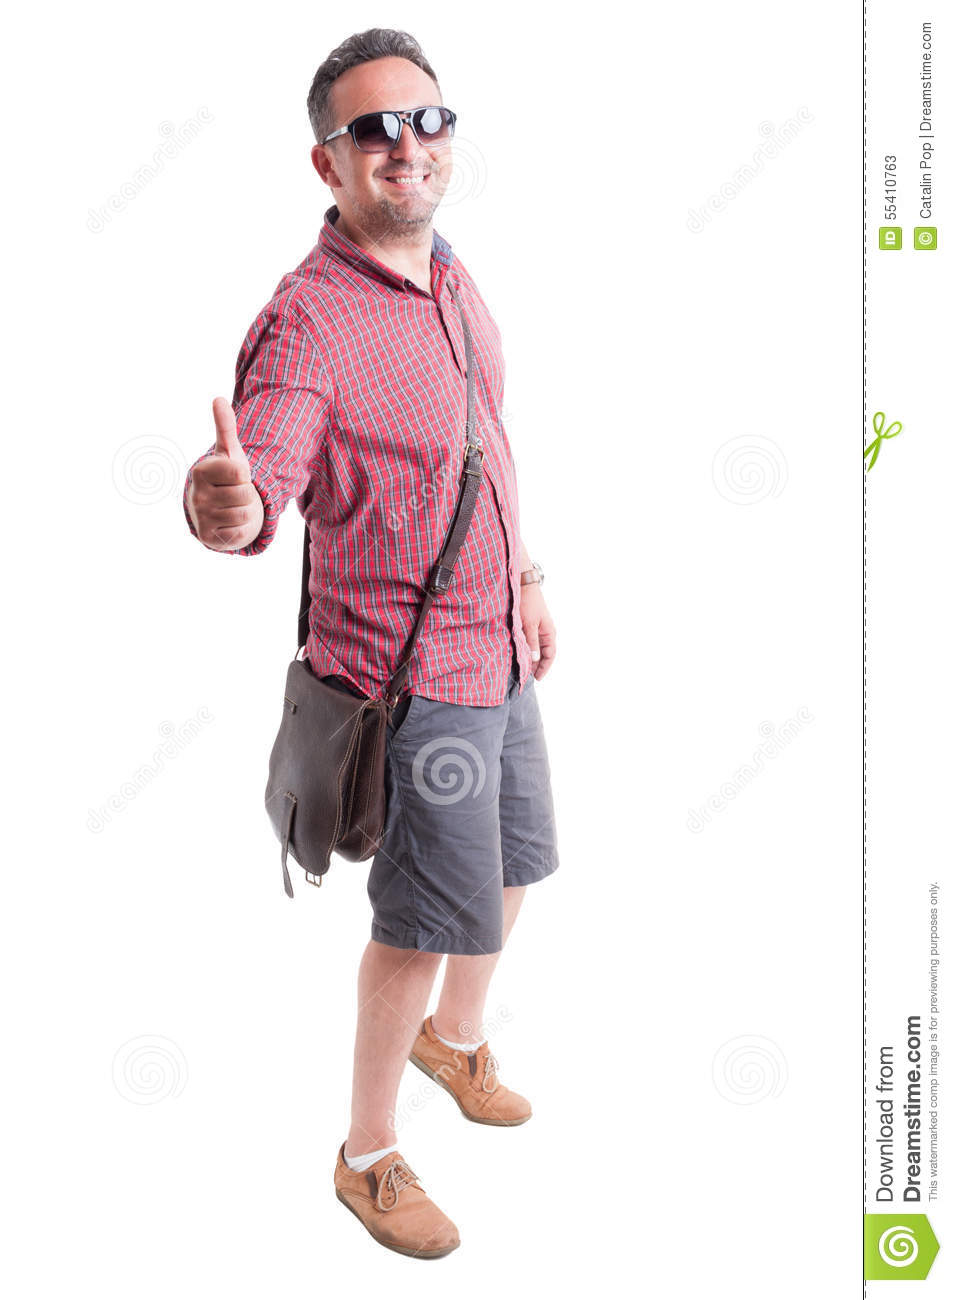 Summer Clothes Men Concept Man Model Posing Showing Like 55410763 Jpg